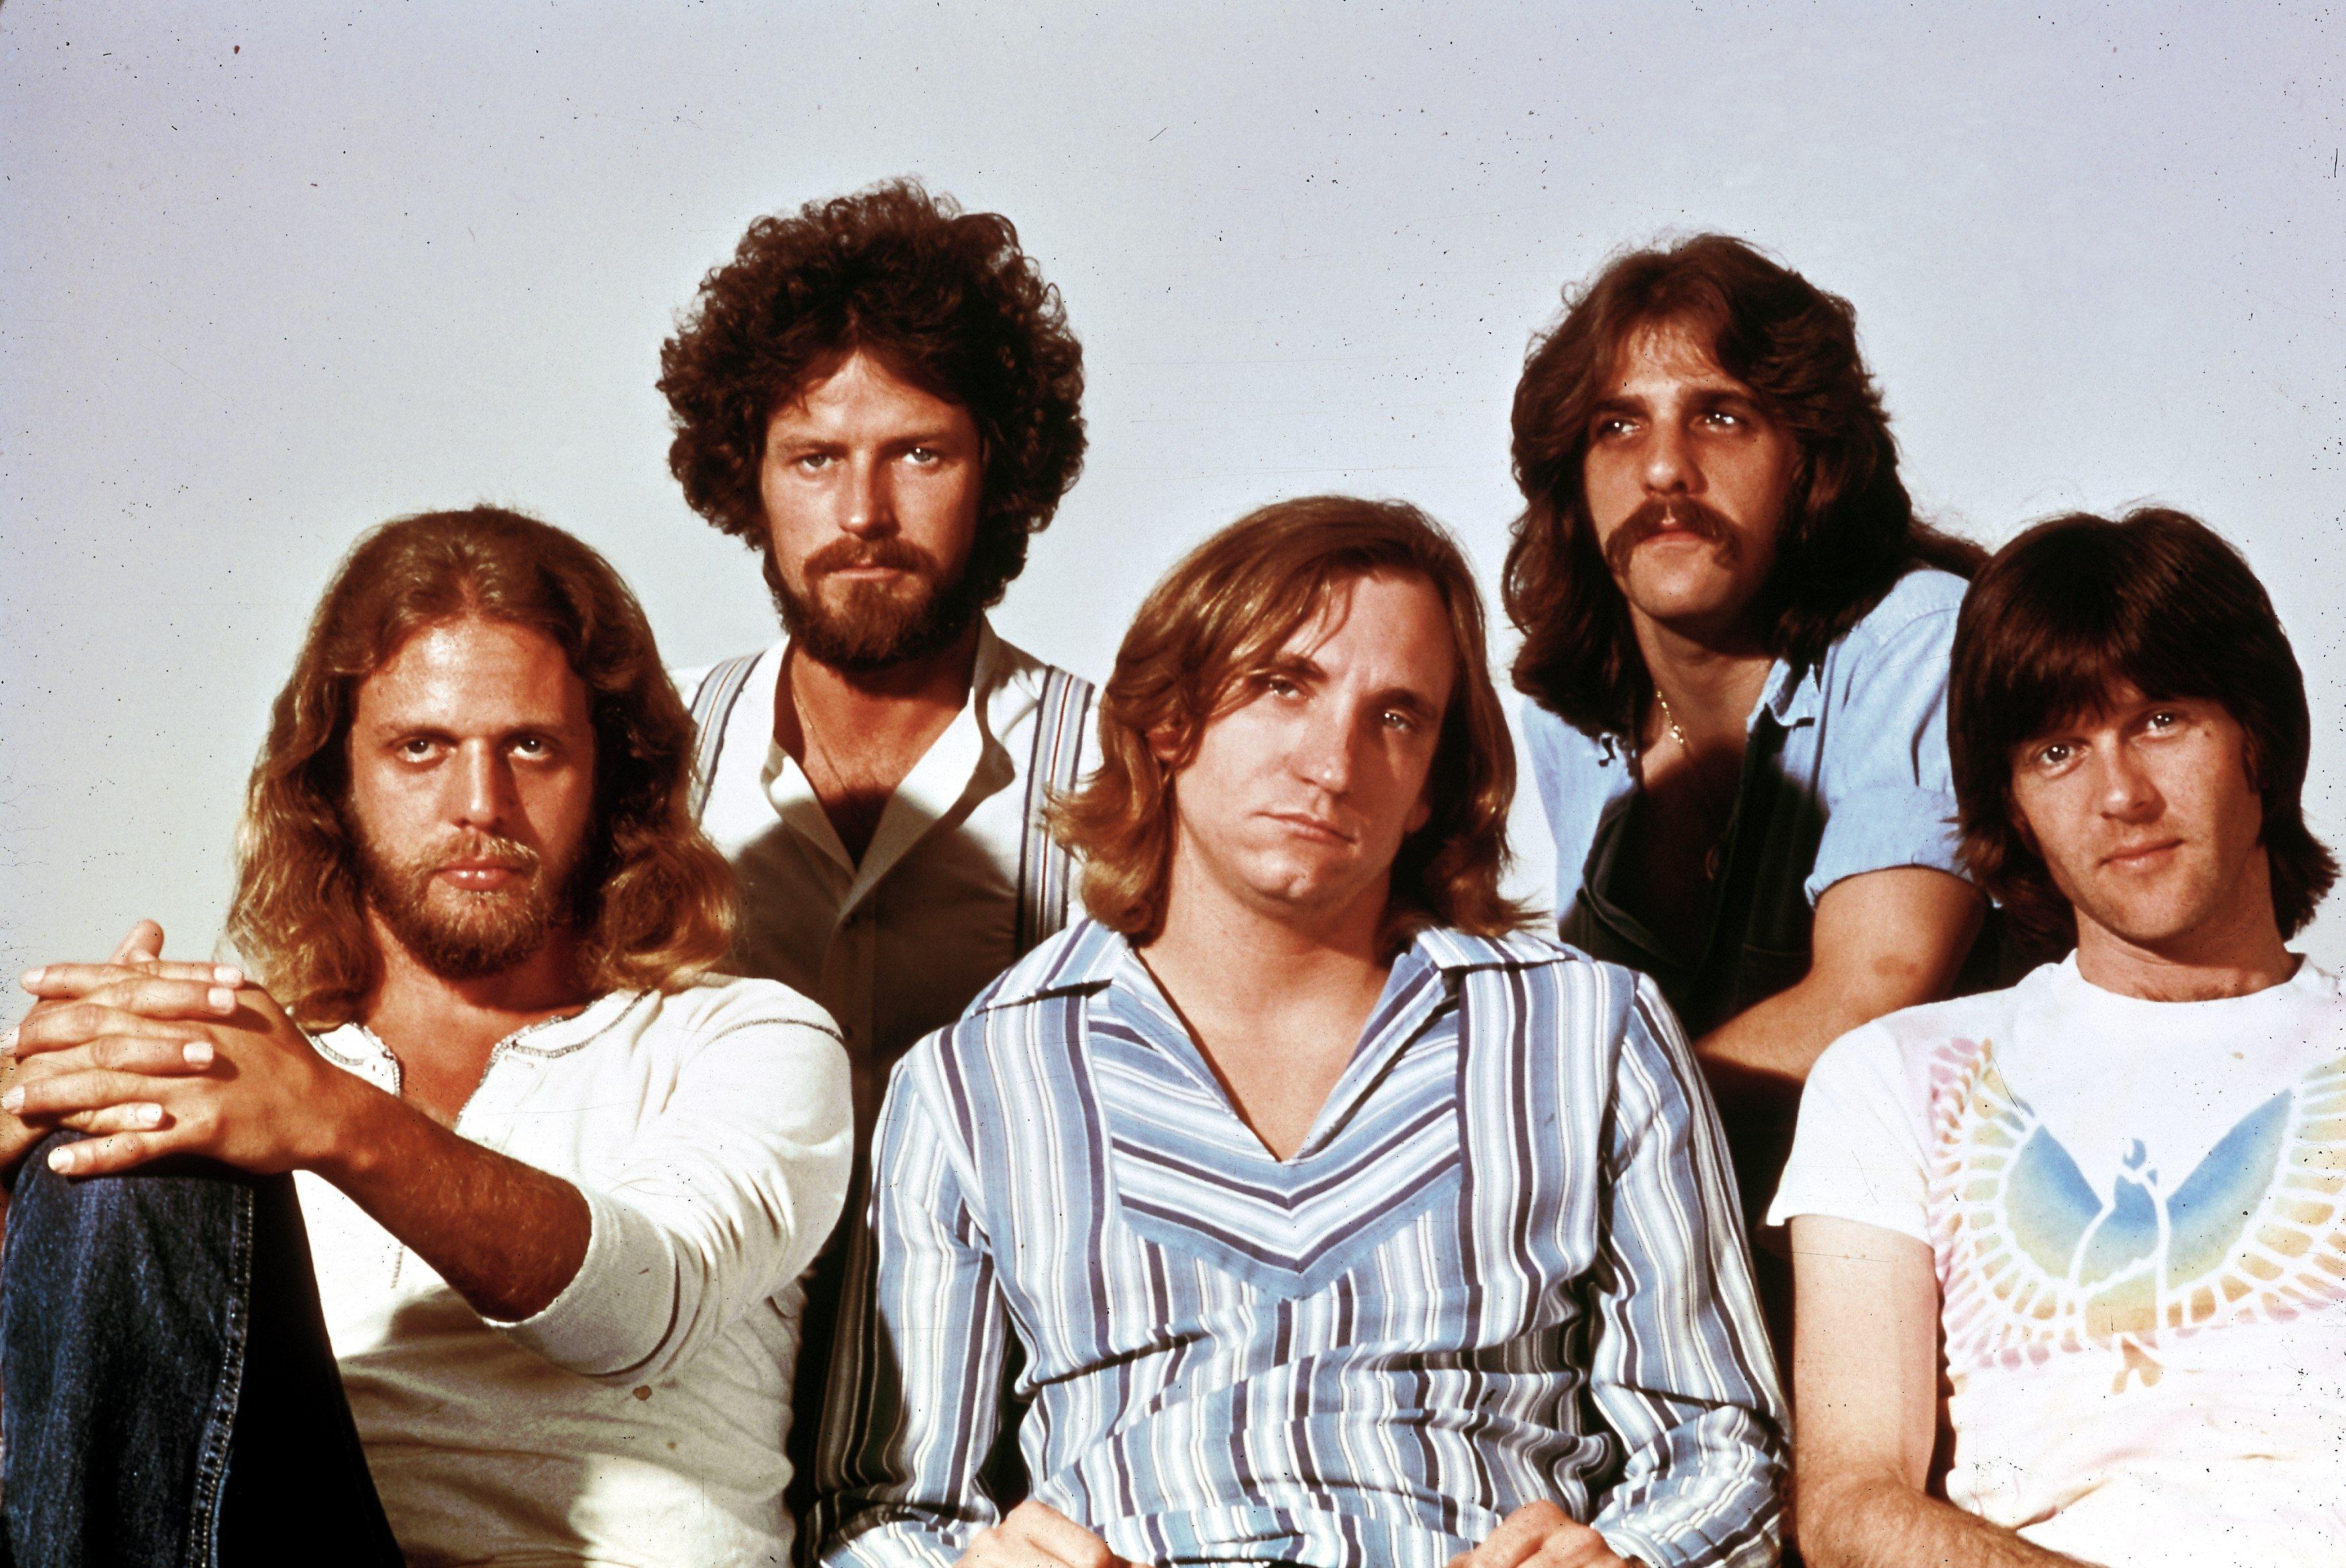 Eagles in 1976